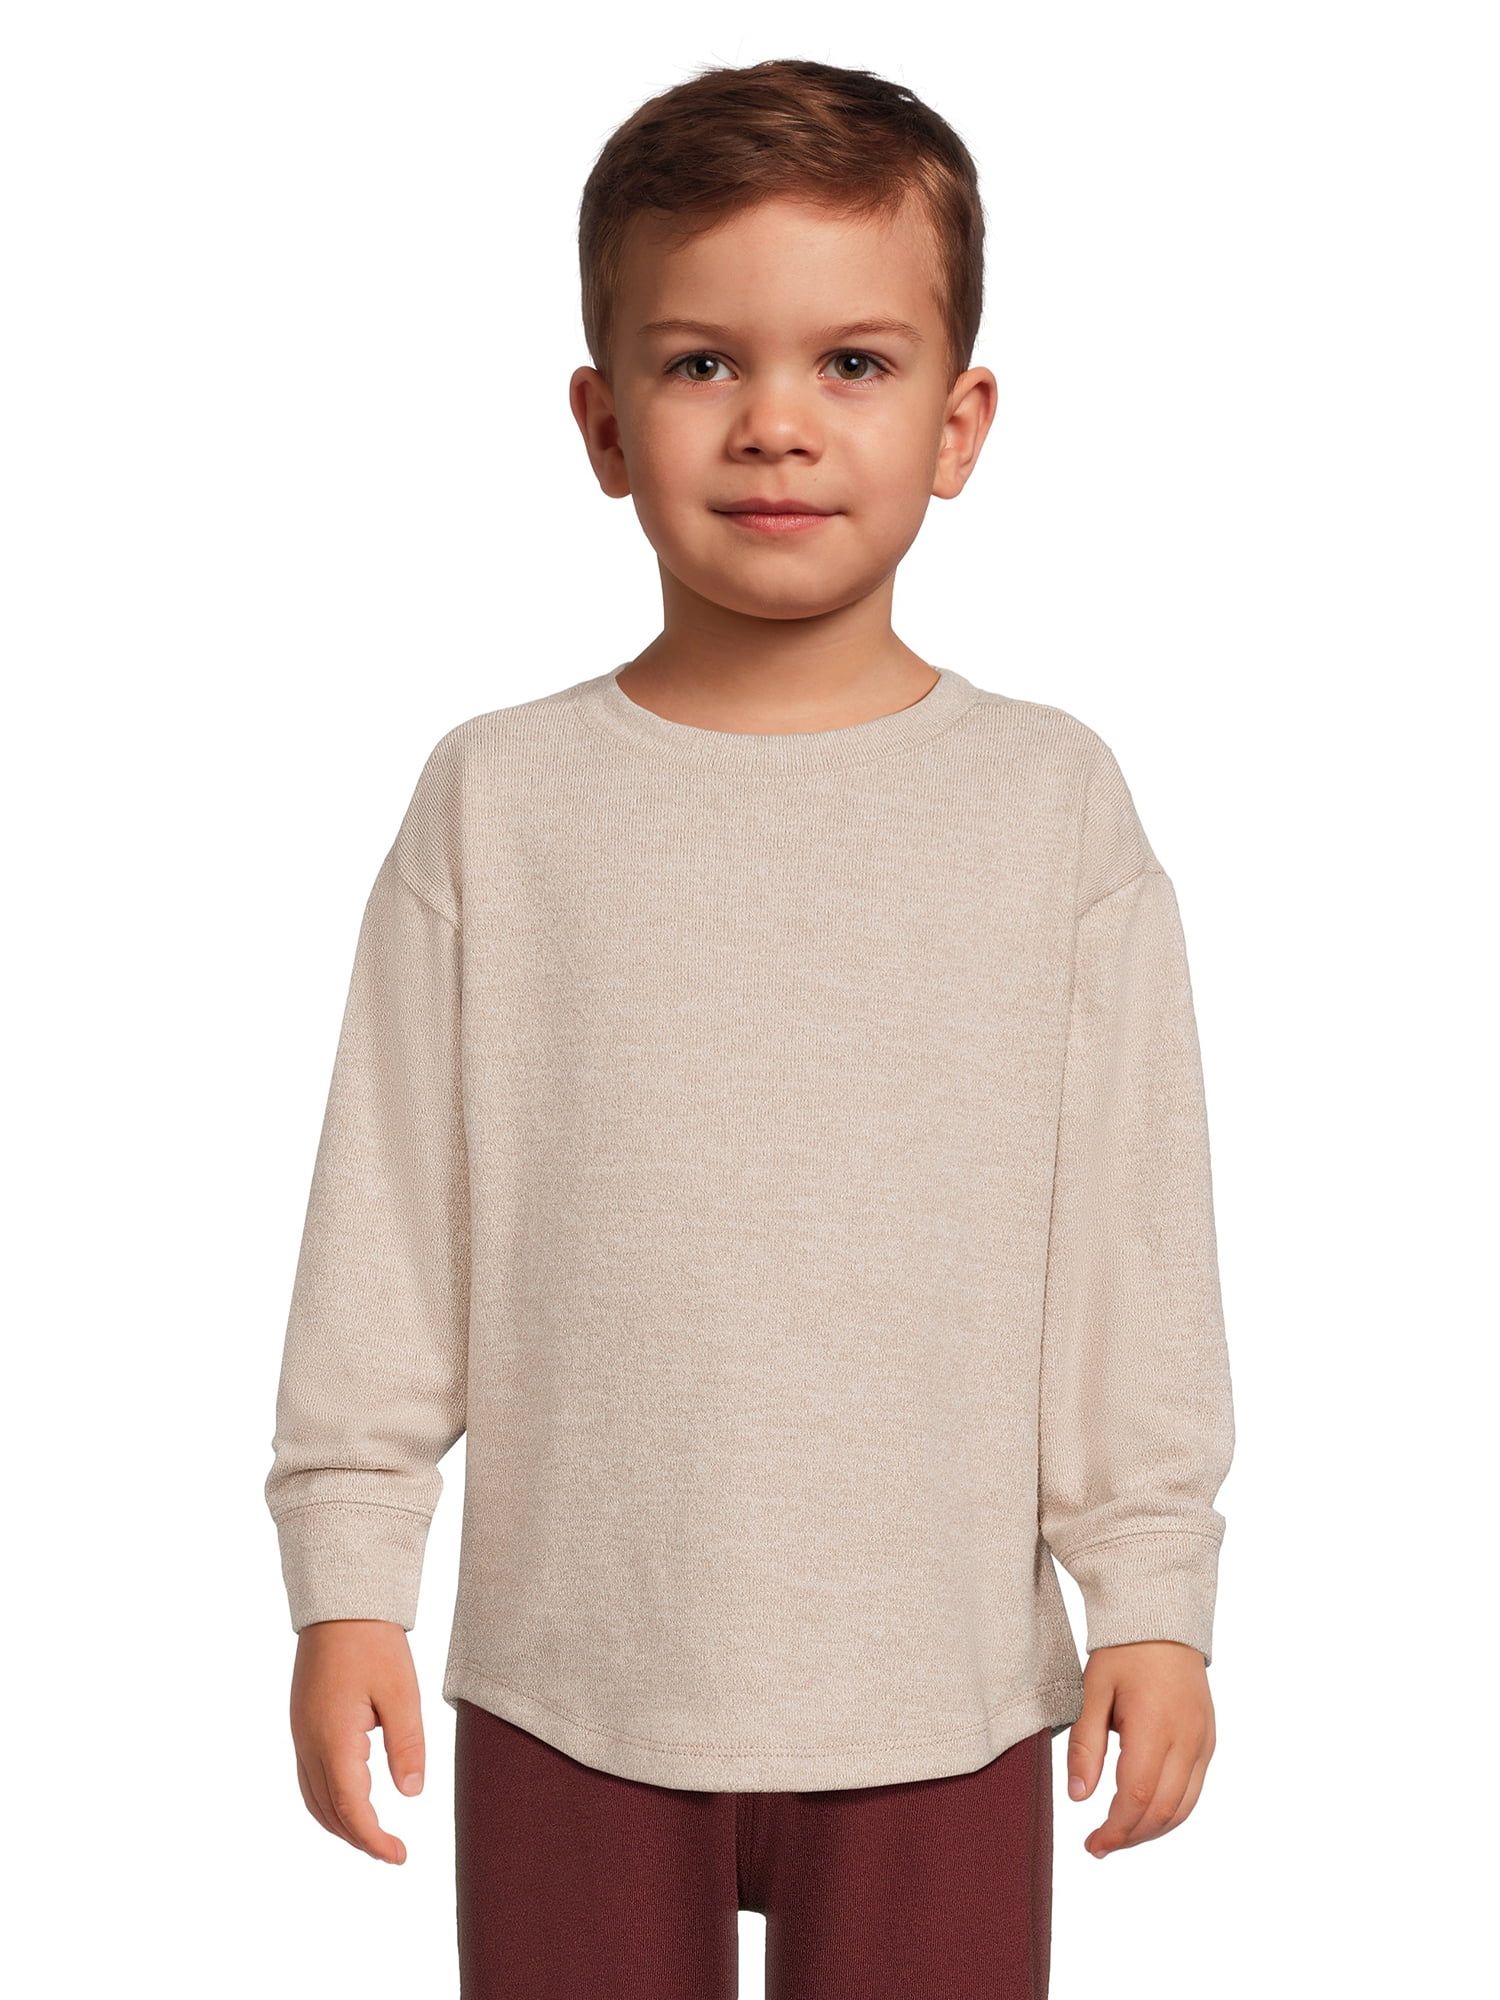 Garanimals Toddler Boy Long Sleeve Knit T-Shirt, Sizes 12M-5T | Walmart (US)